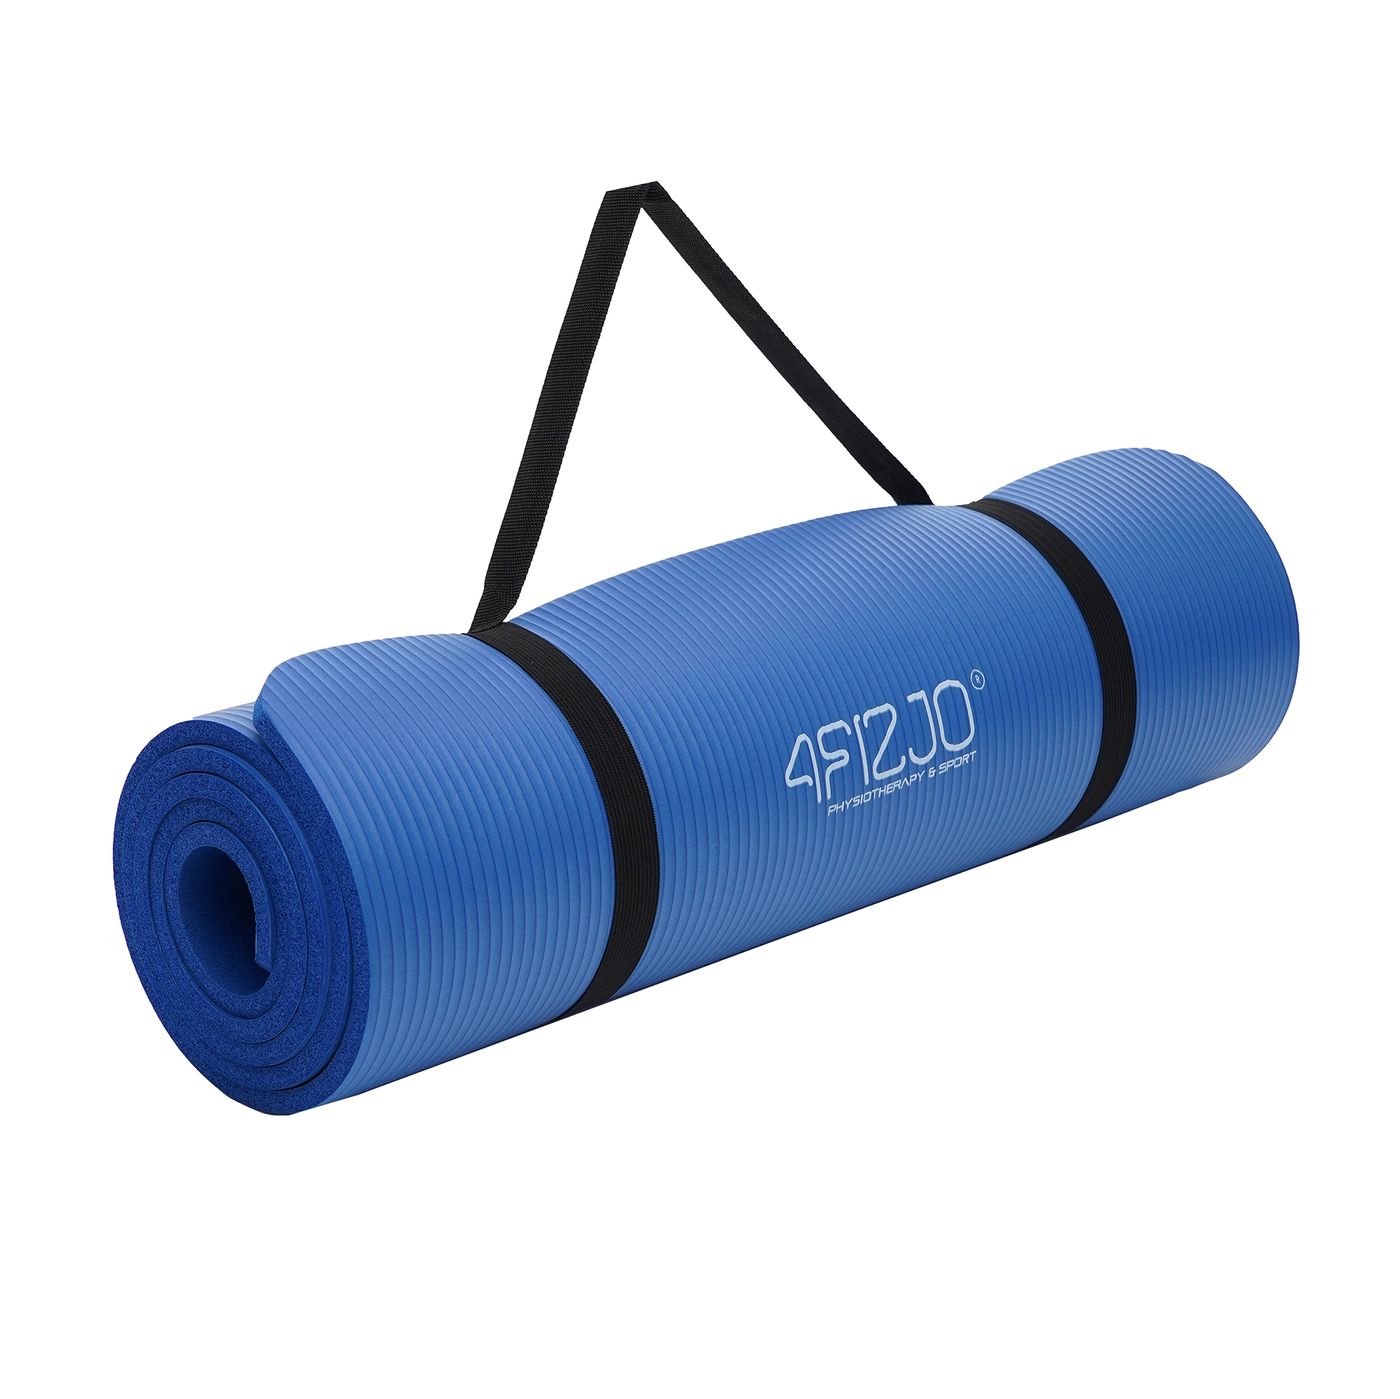 Коврик (мат) спортивный 4FIZJO NBR 180 x 60 x 1 см для йоги и фитнеса 4FJ0014 Blue